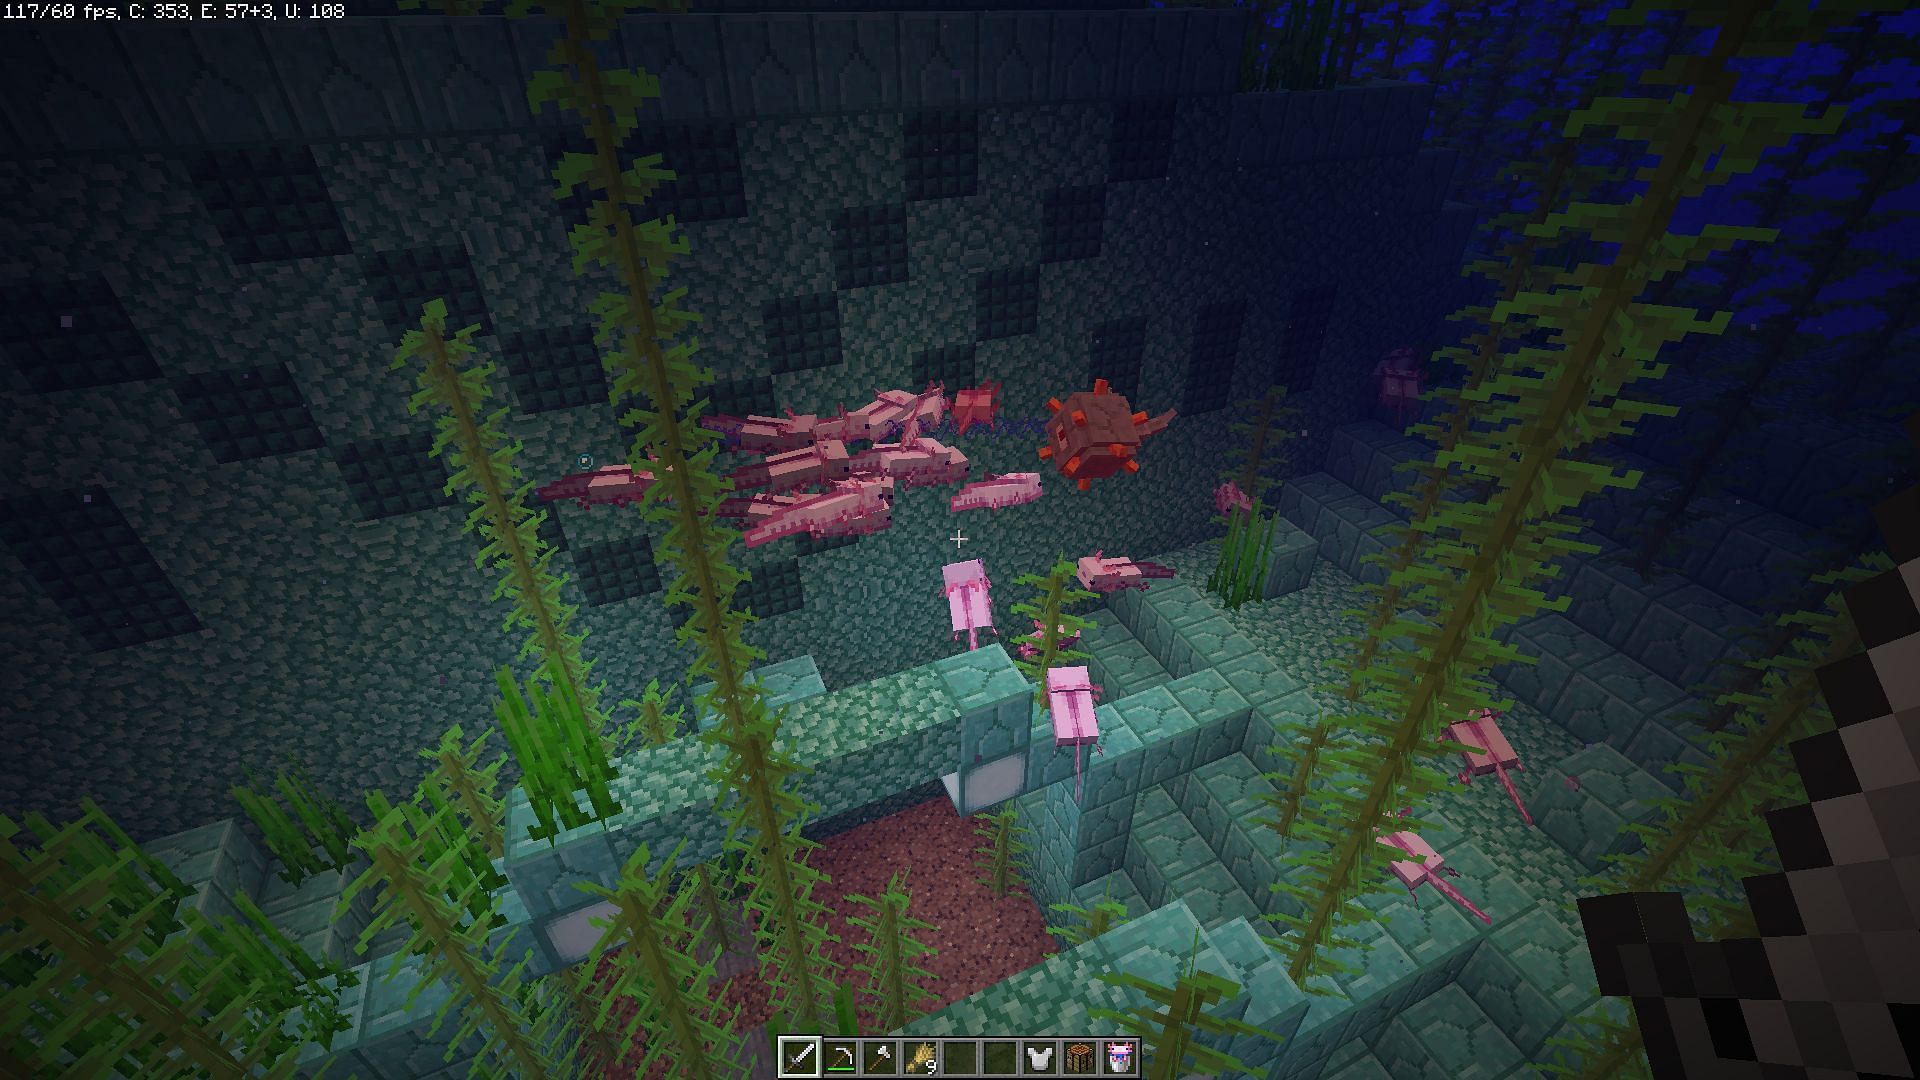 Army of Axolotls attacking a Guardian in Minecraft 1.19 (Image via Mojang)